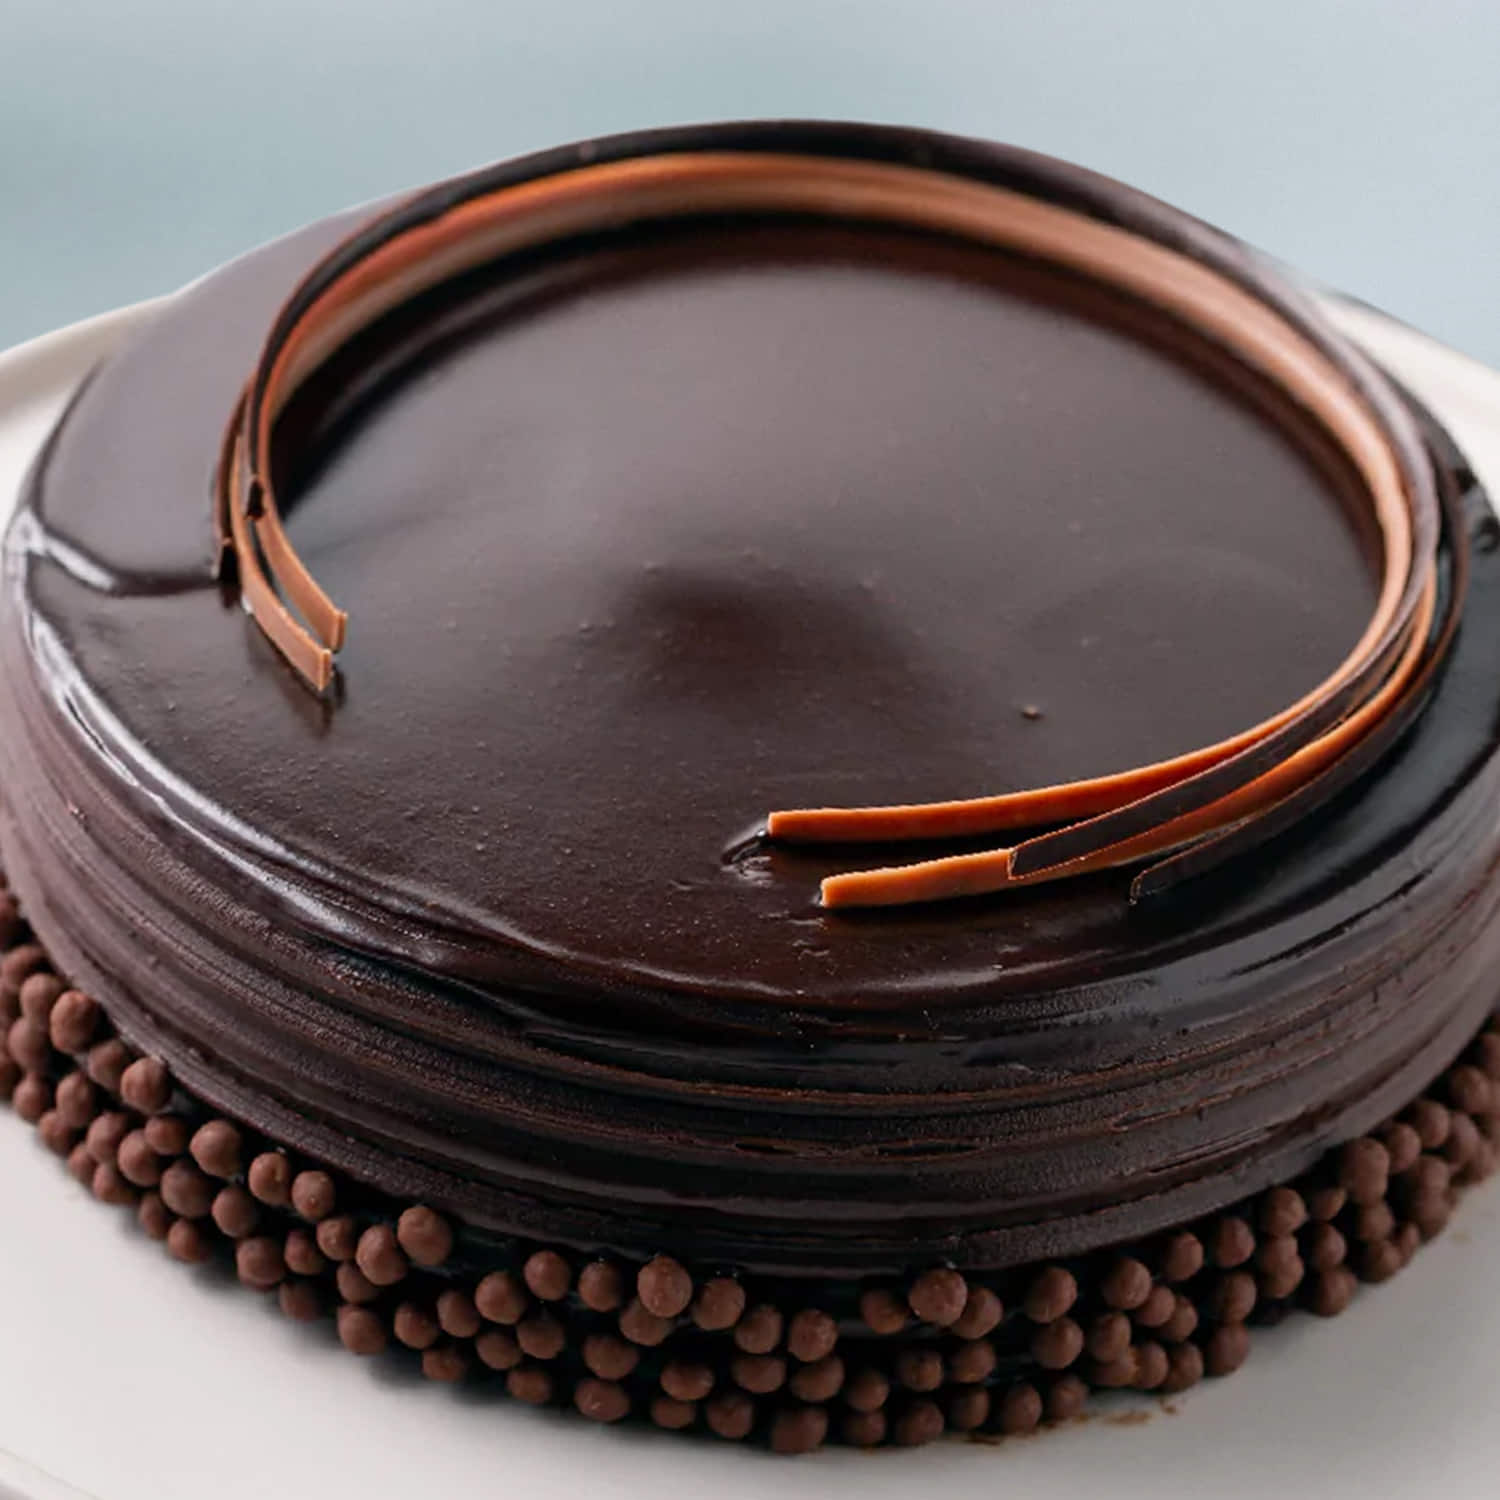 Best Bakeries In Delhi For chocolate Truffle Cake | WhatsHot Delhi Ncr